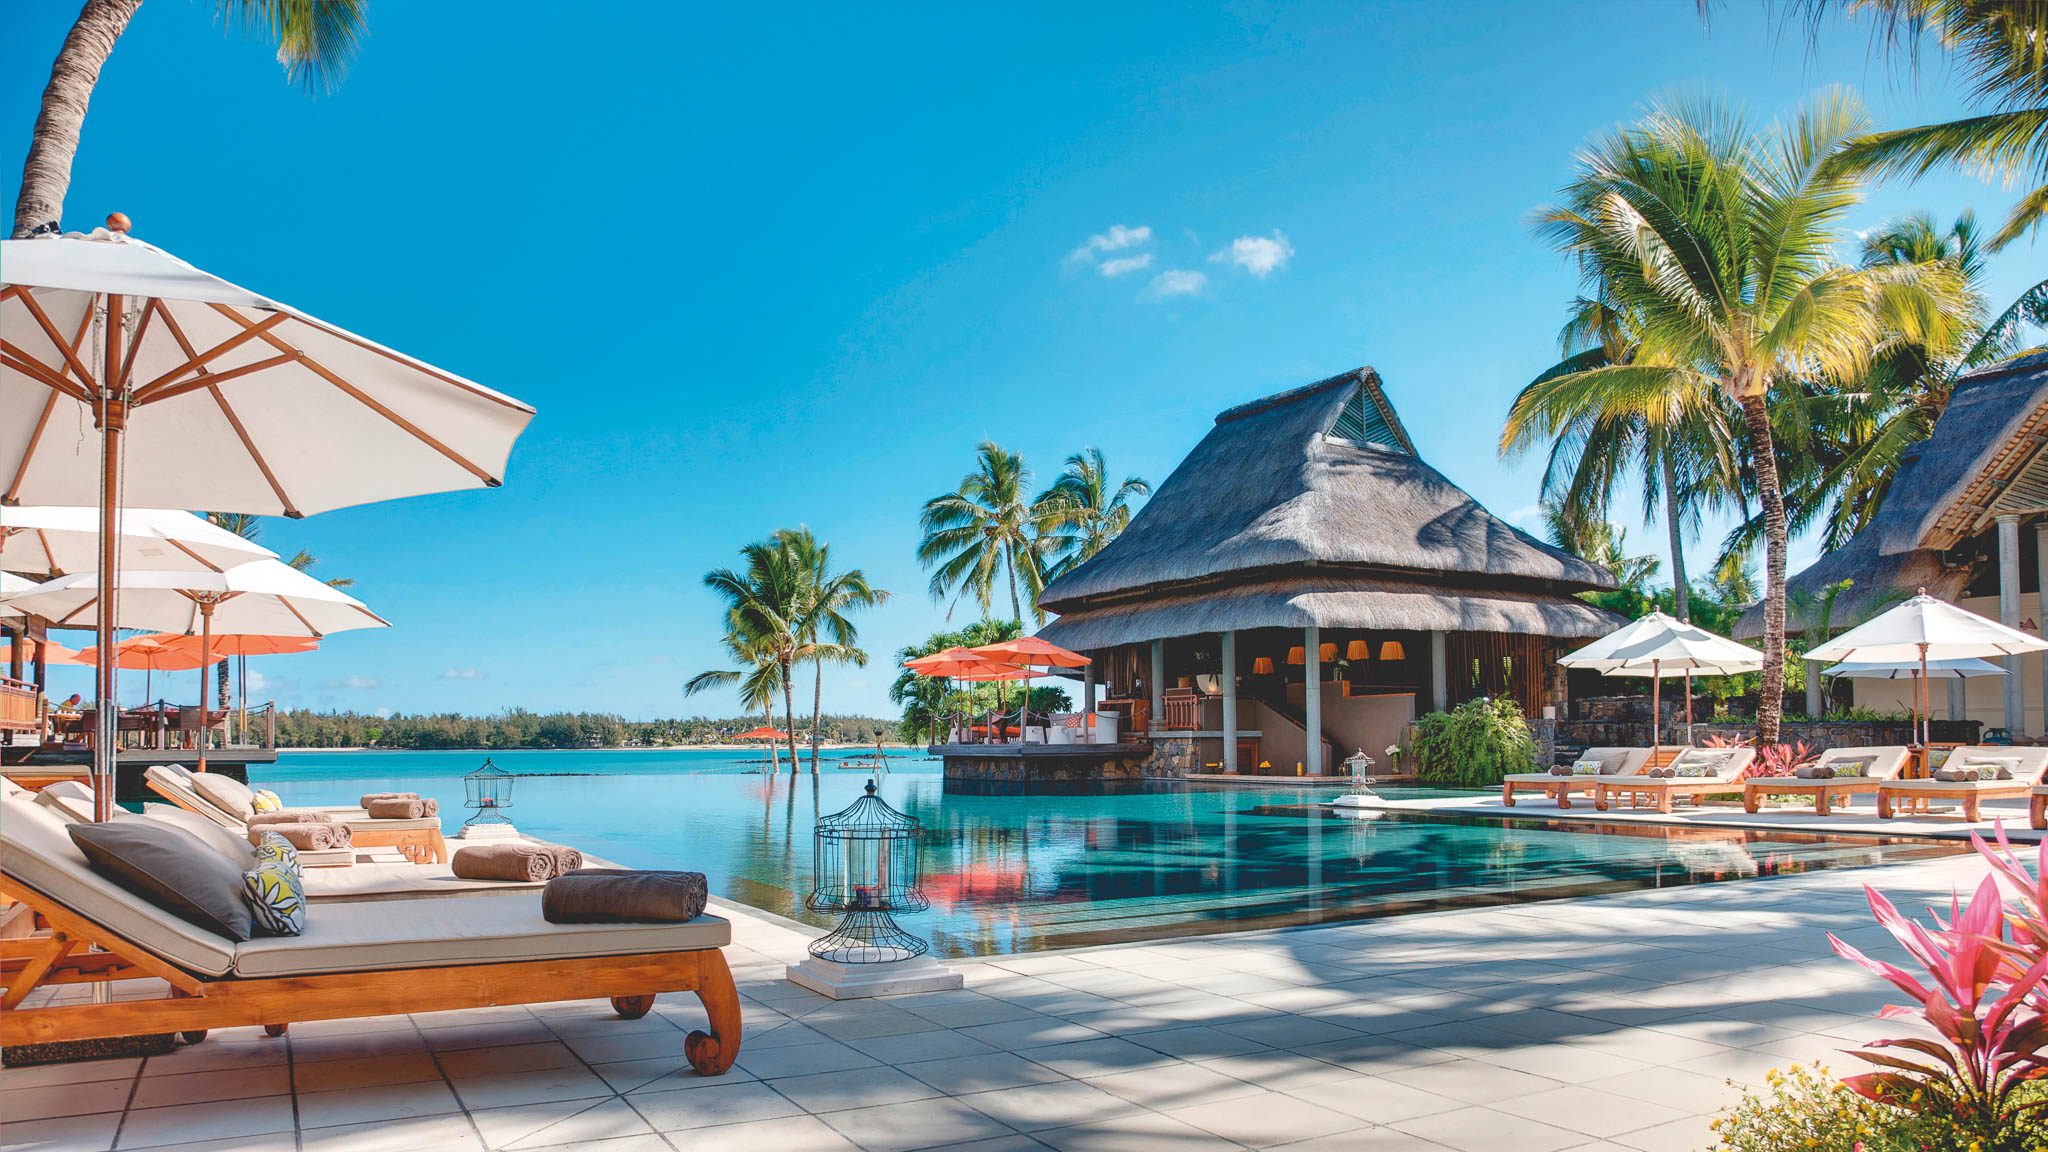 Mauritius, Van paradijs naar paradijs hoppen: <strong>de eindeloze charmes van Mauritius</strong>